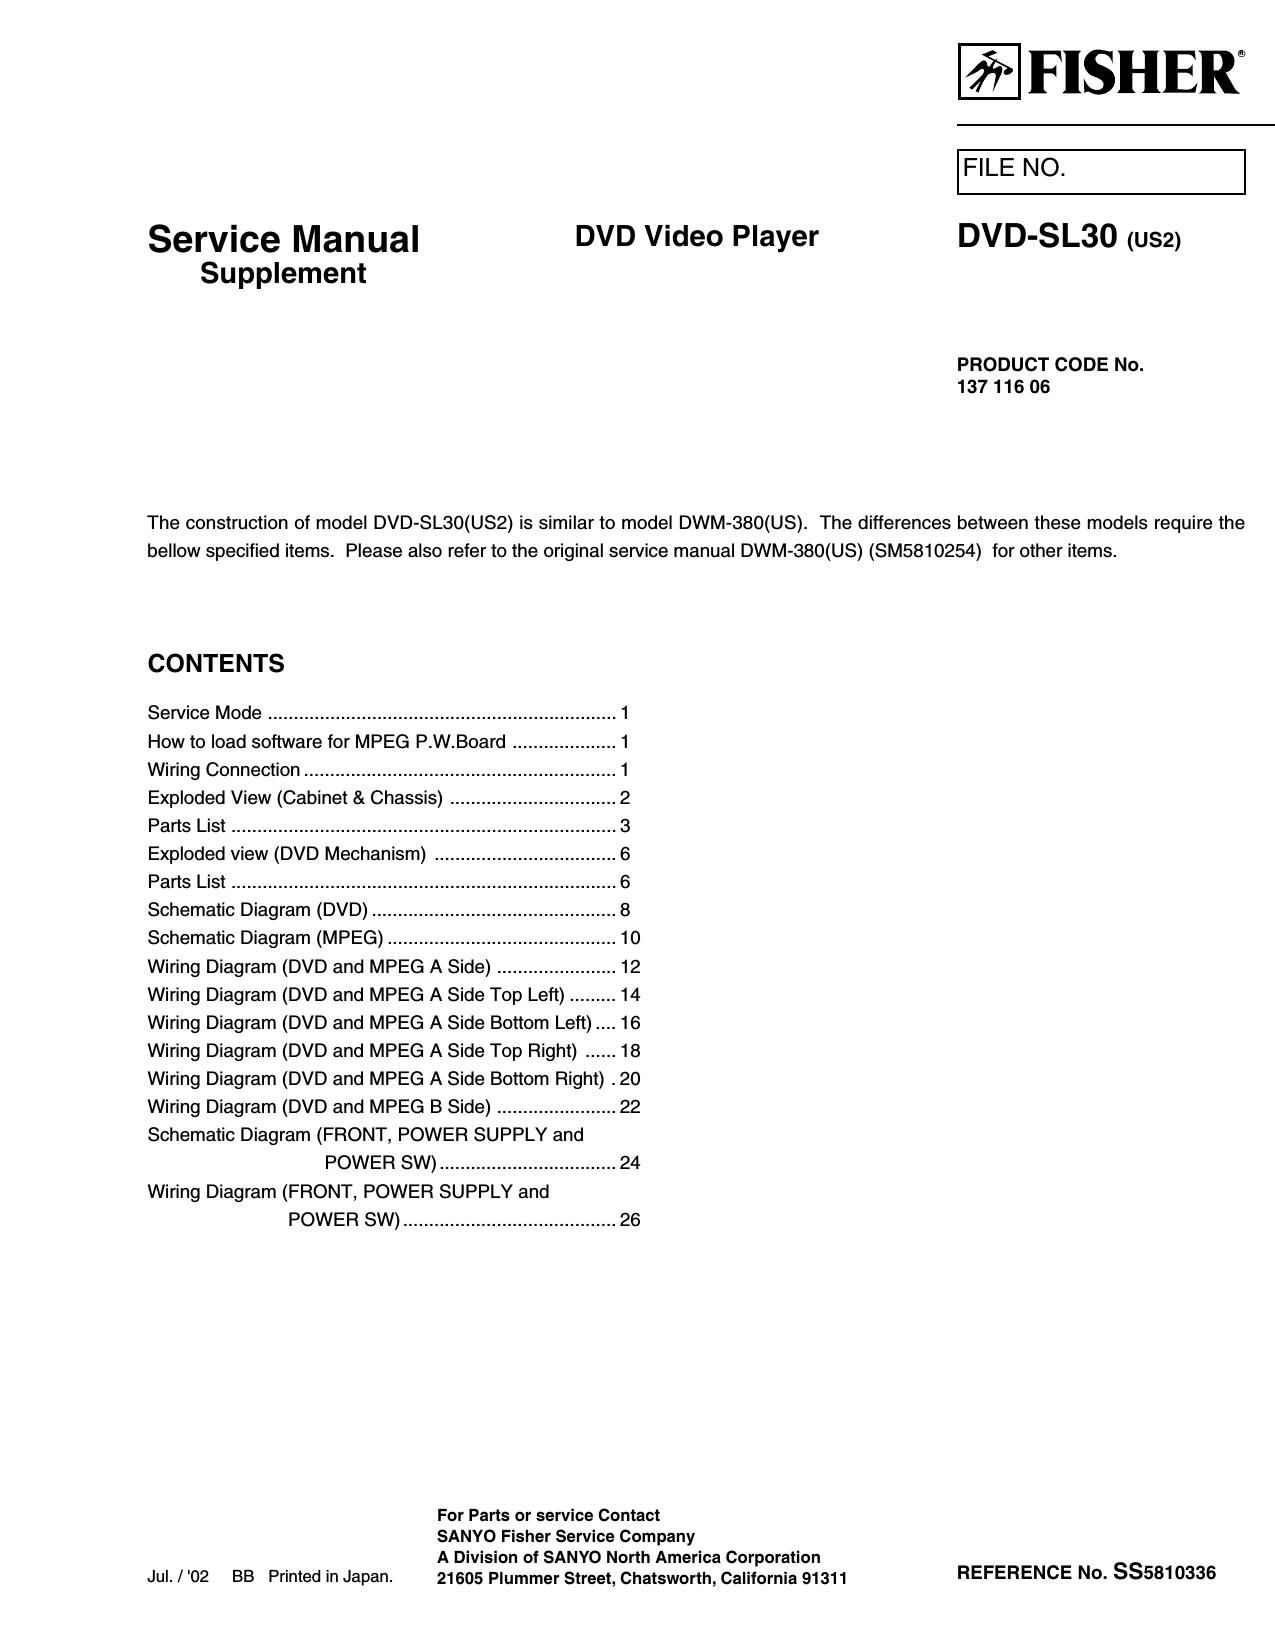 Fisher DVD SL30 Service Manual